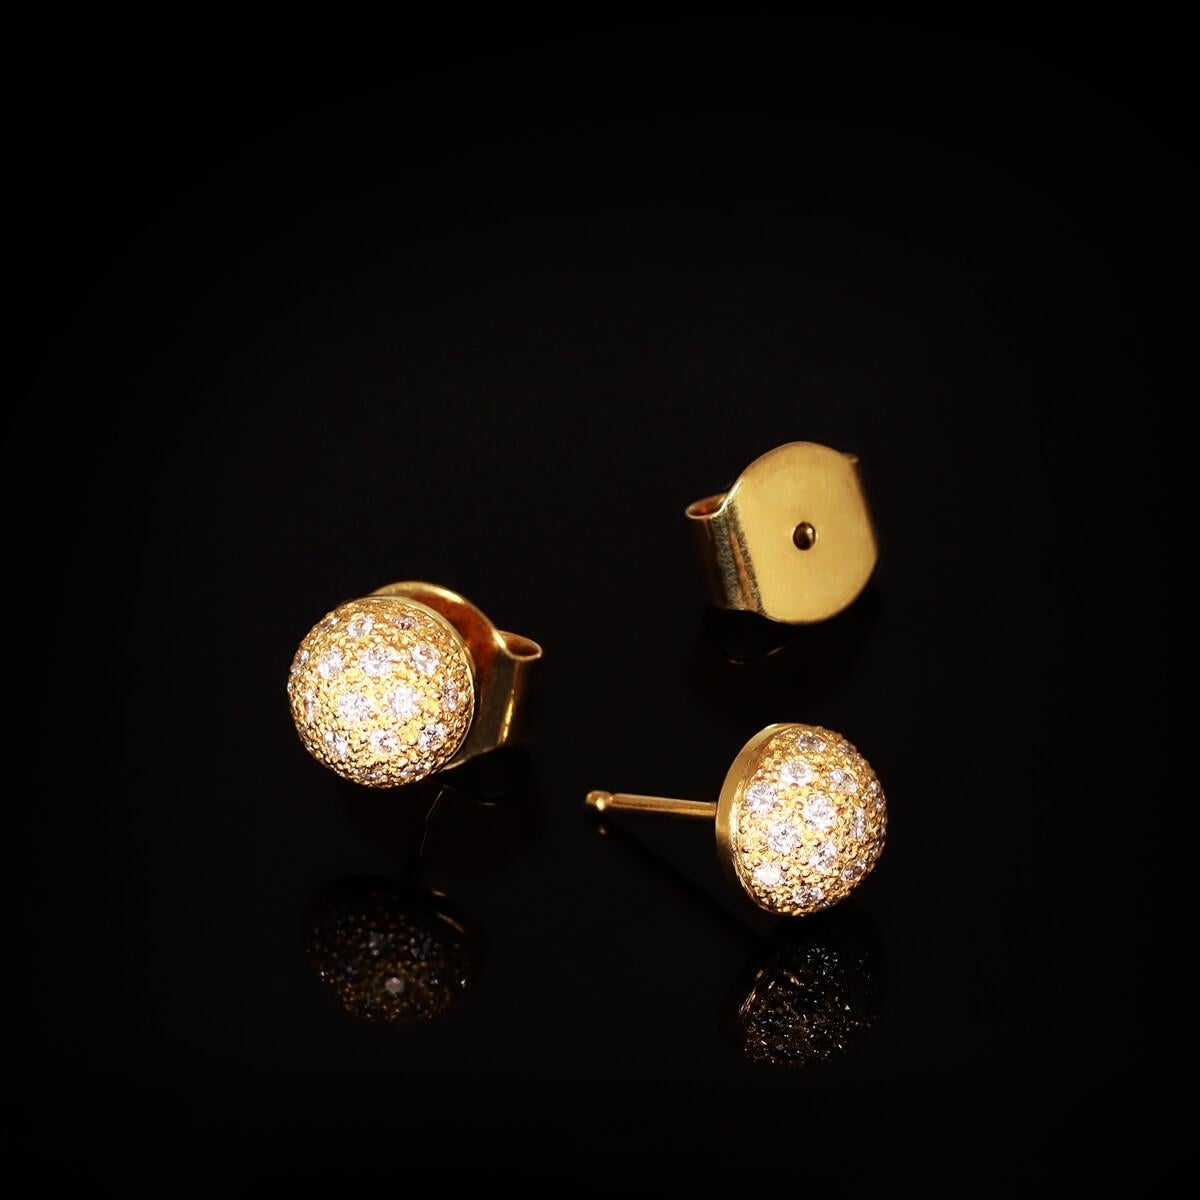 Cabochon Australian 7.27ct Boulder Opal & 18k Gold Earrings with Detachable Diamond Studs For Sale